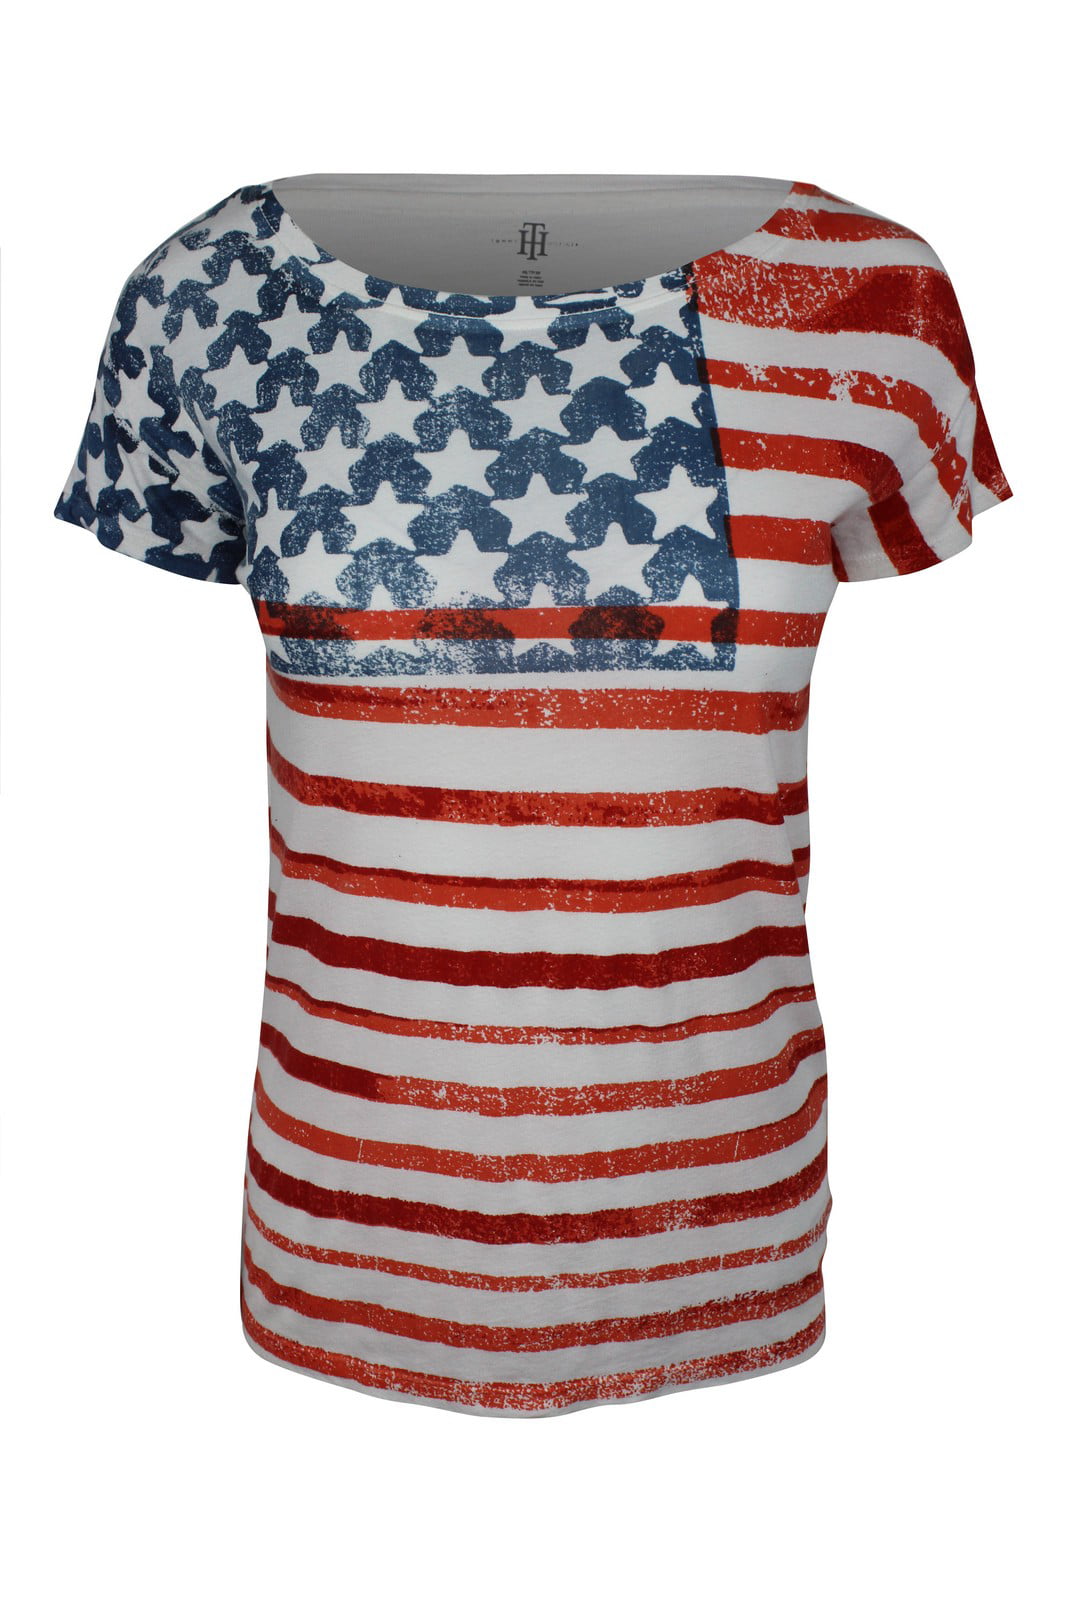 Tommy Hilfiger Women's Vintage American Front Print T-Shirt -